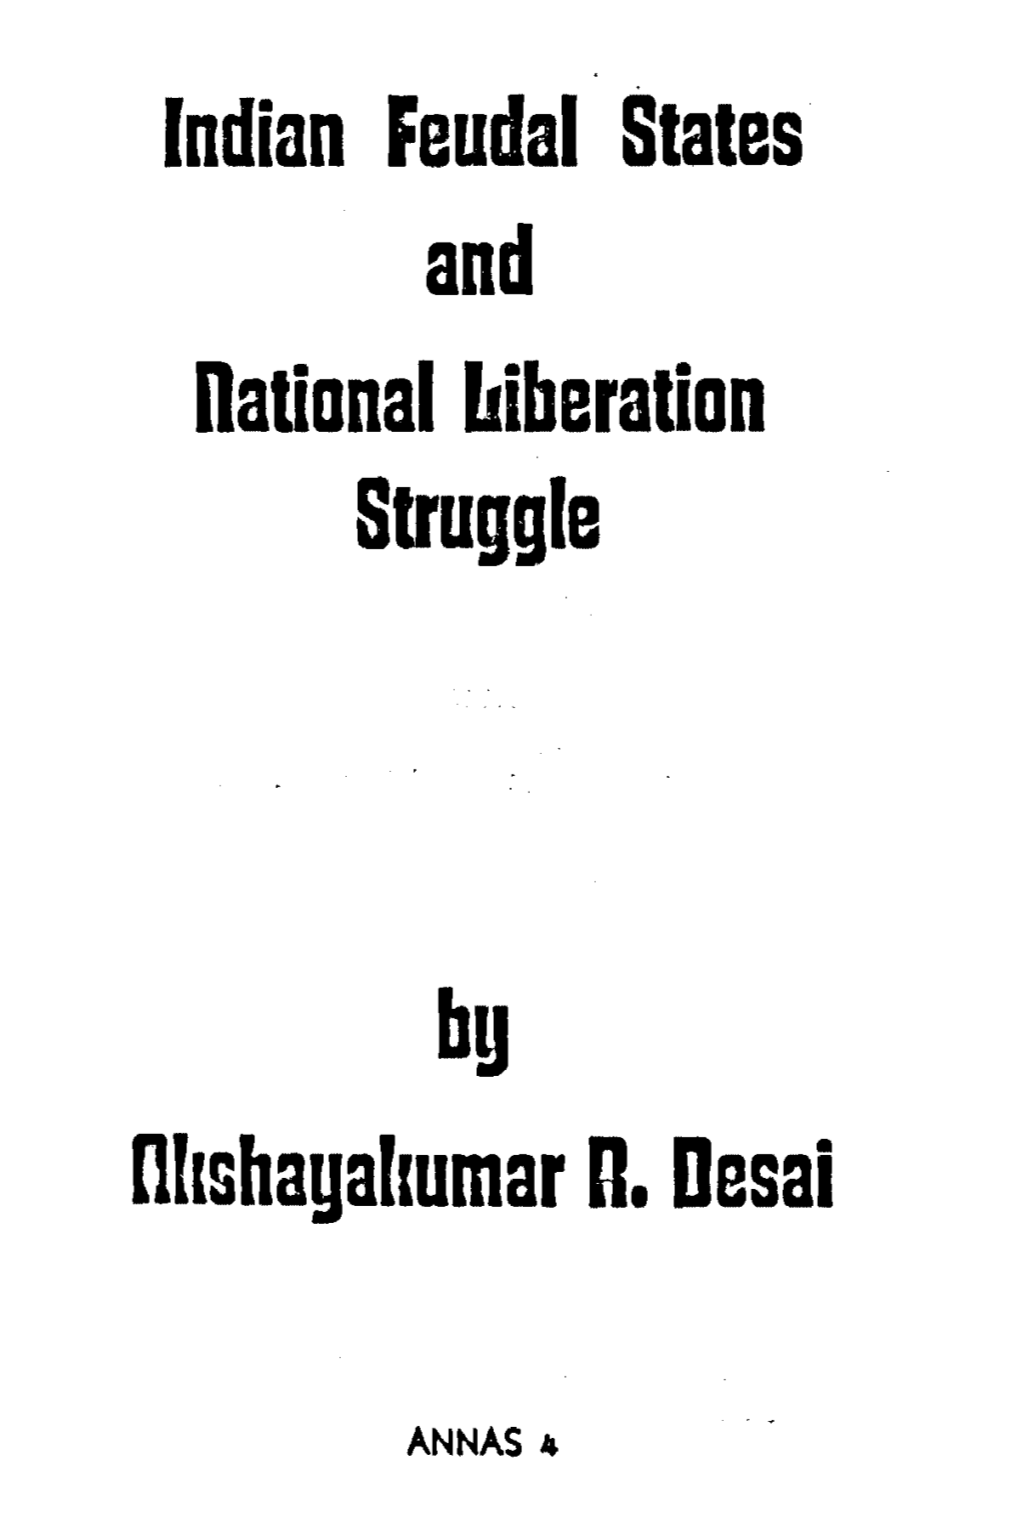 Indian Feudal States National Biberation Struggle Nlrshagaltumar